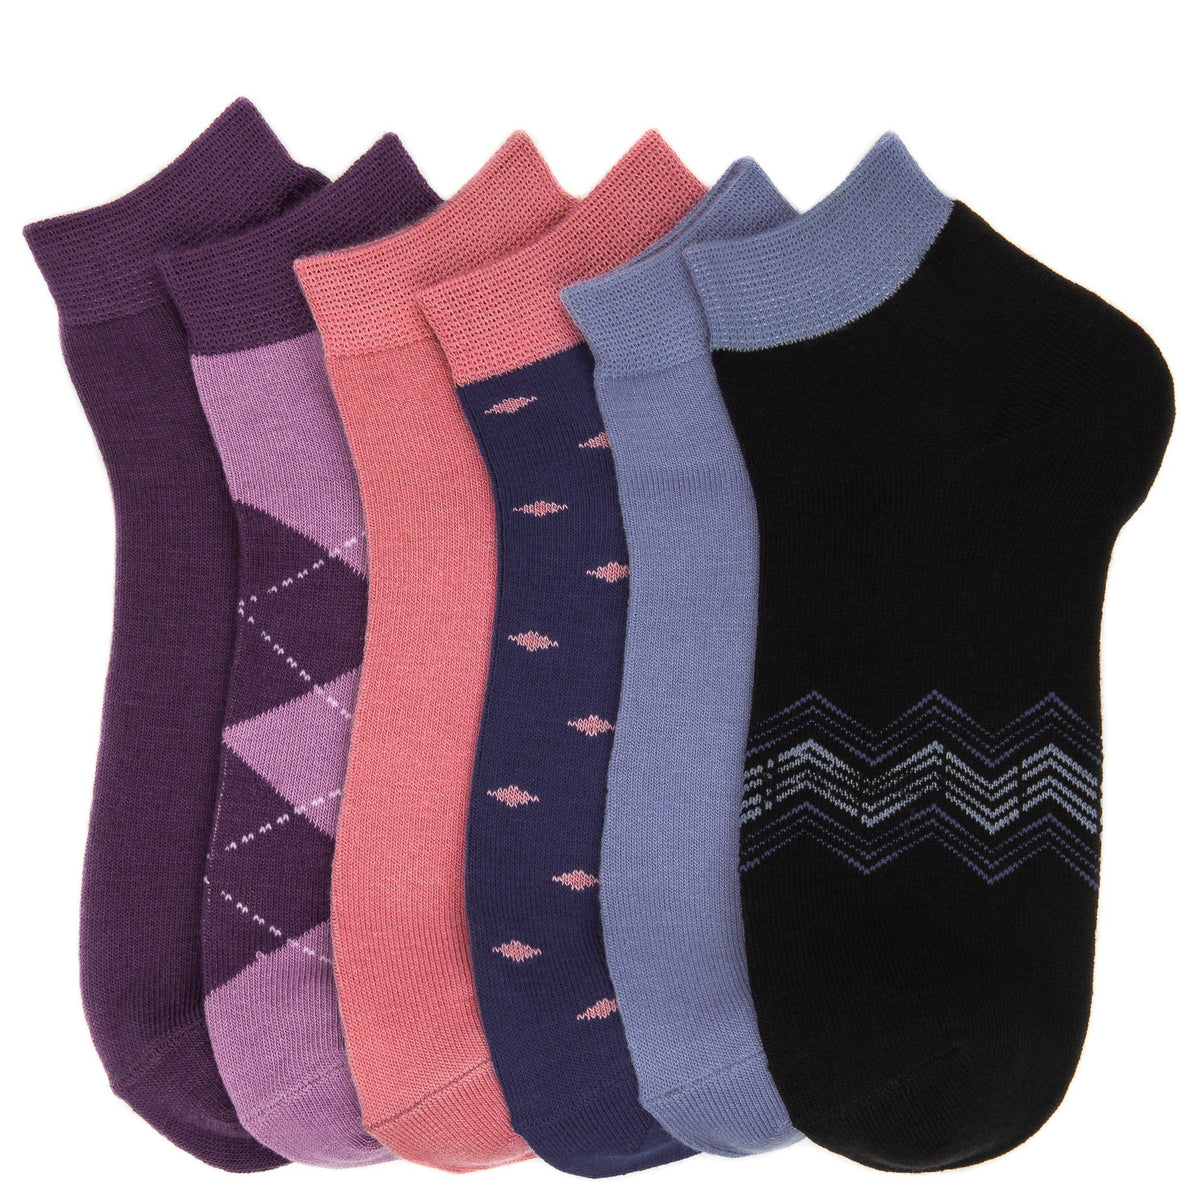 Women's Soft Premium Low Cut Socks - 6 Pairs - Set 5